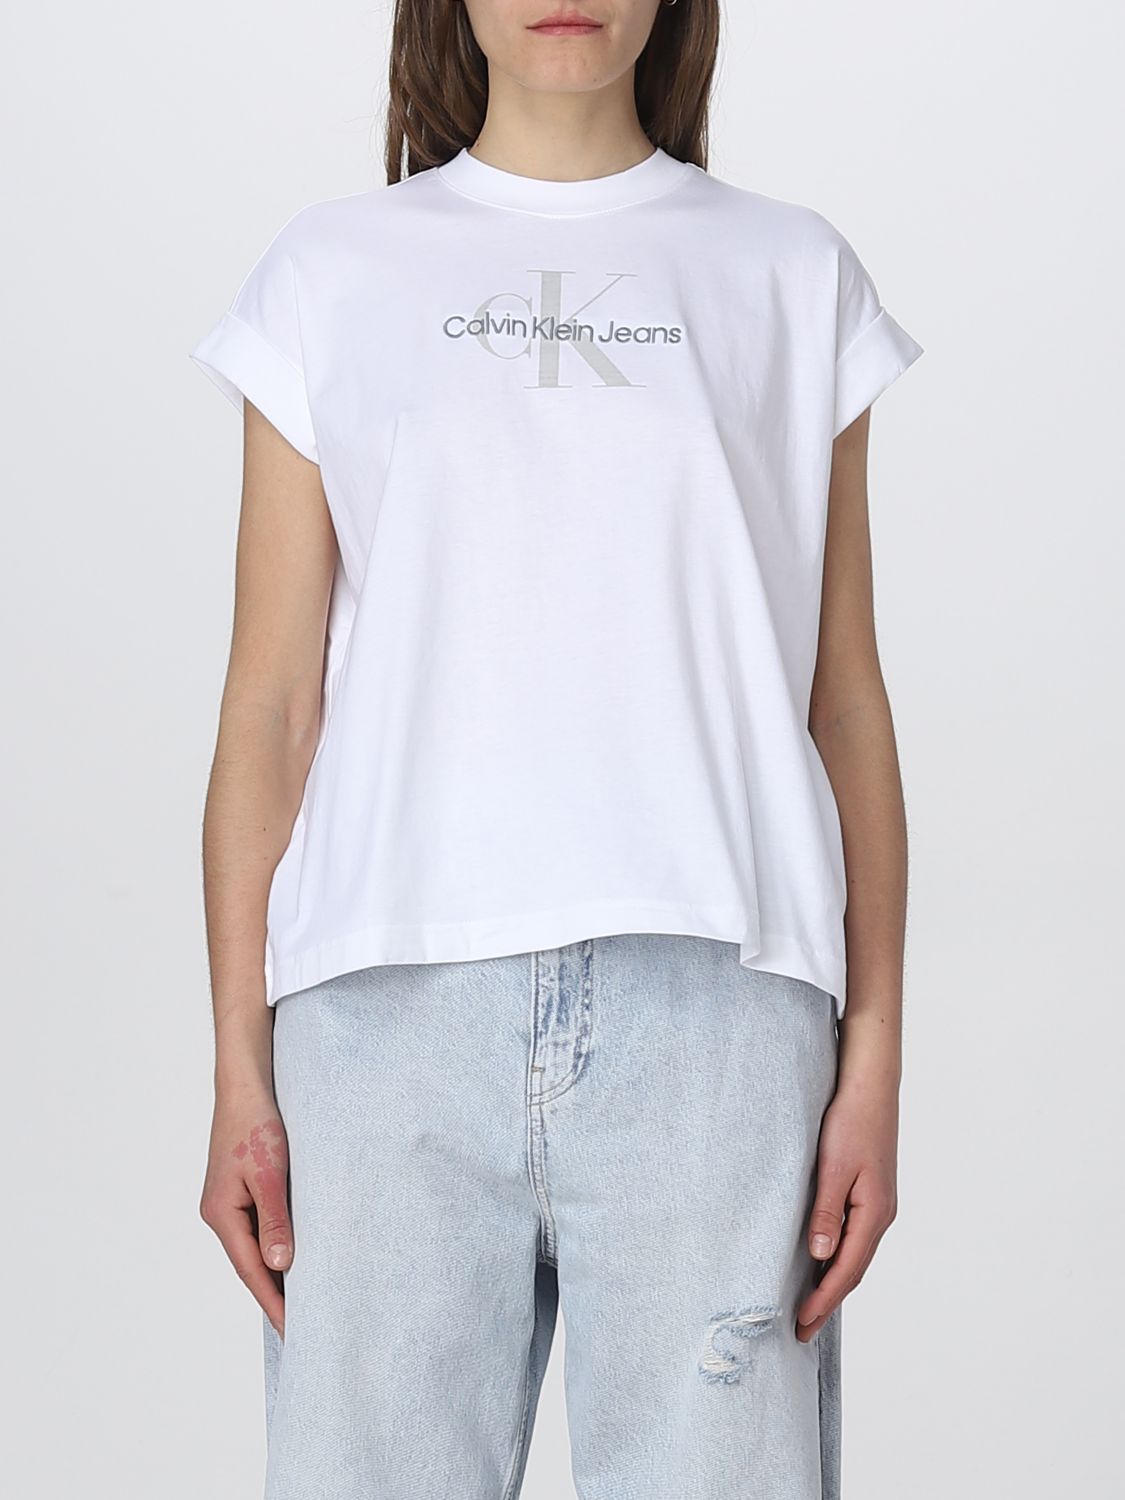 Belicoso codo vanidad CALVIN KLEIN JEANS: t-shirt for woman - White | Calvin Klein Jeans t-shirt  J20J220717 online on GIGLIO.COM